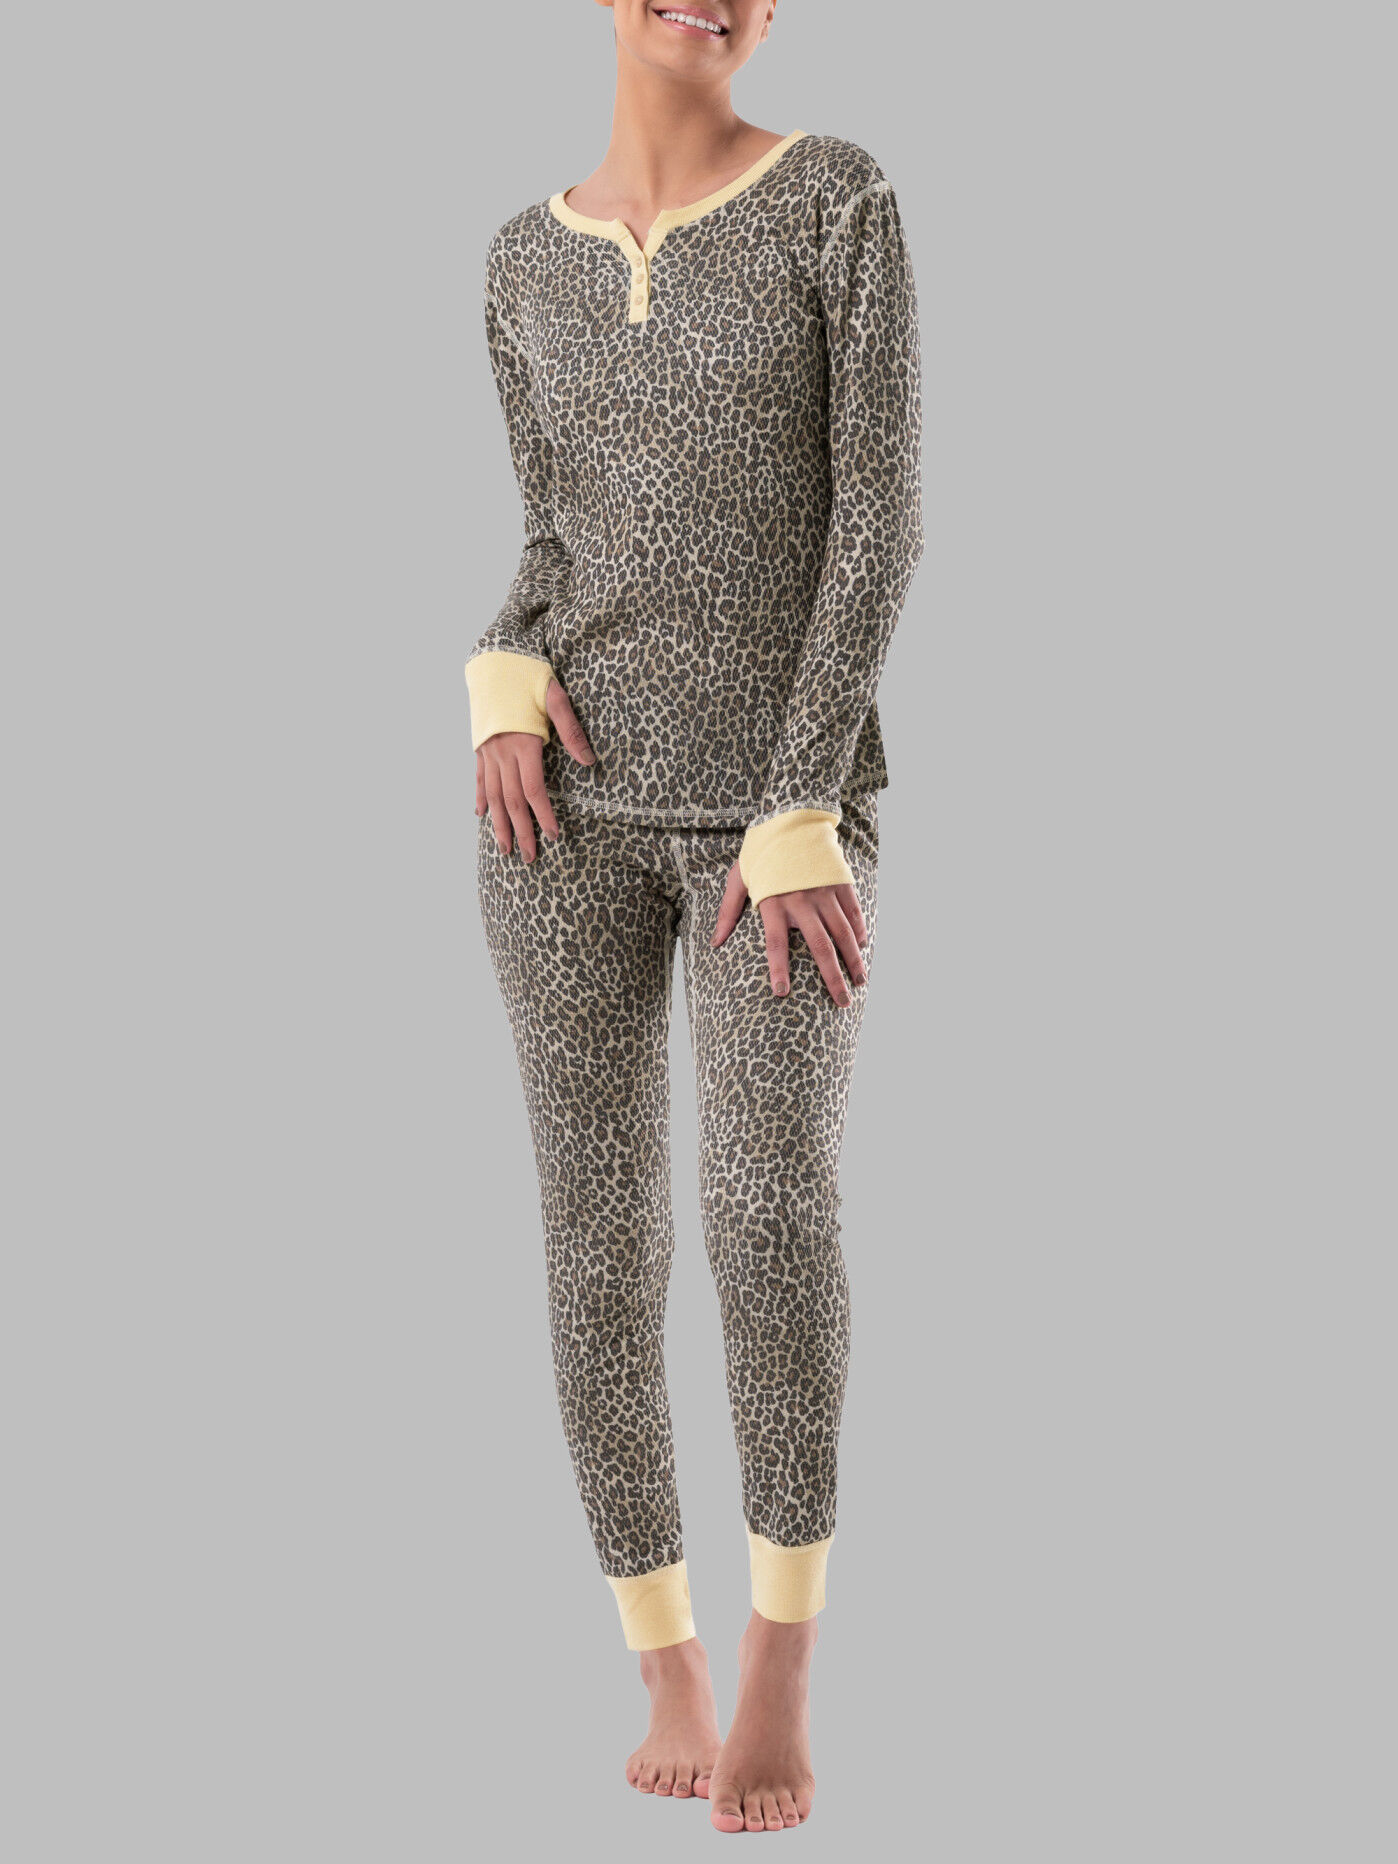 Esme Girl's Party Long Sleeve Top & Legging Pajama Set – I Love Sweet Treatz